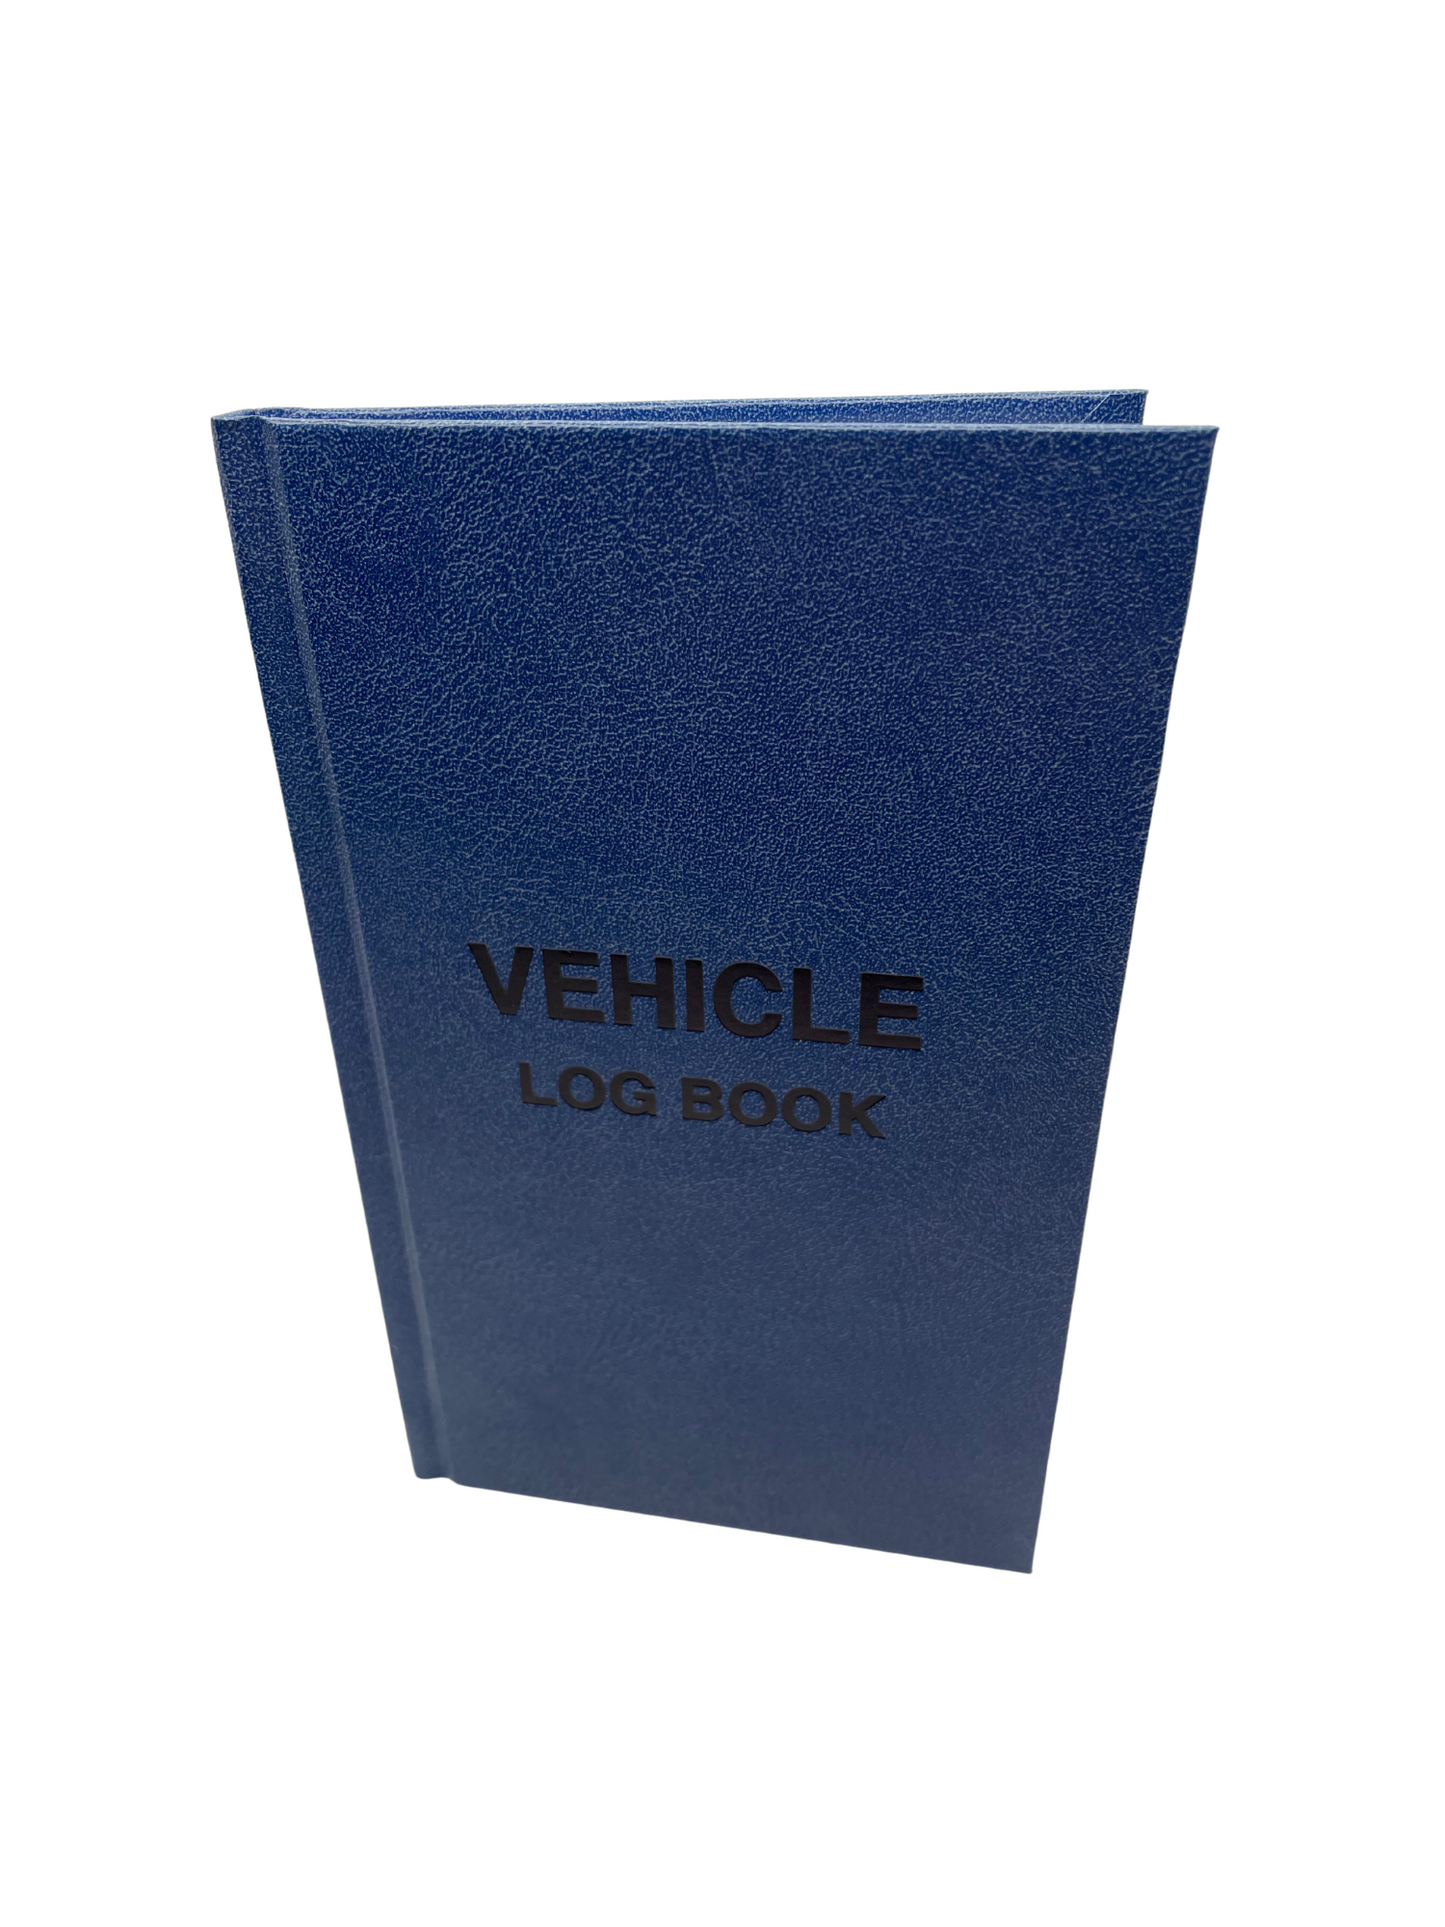 Vehicle Log Book #603